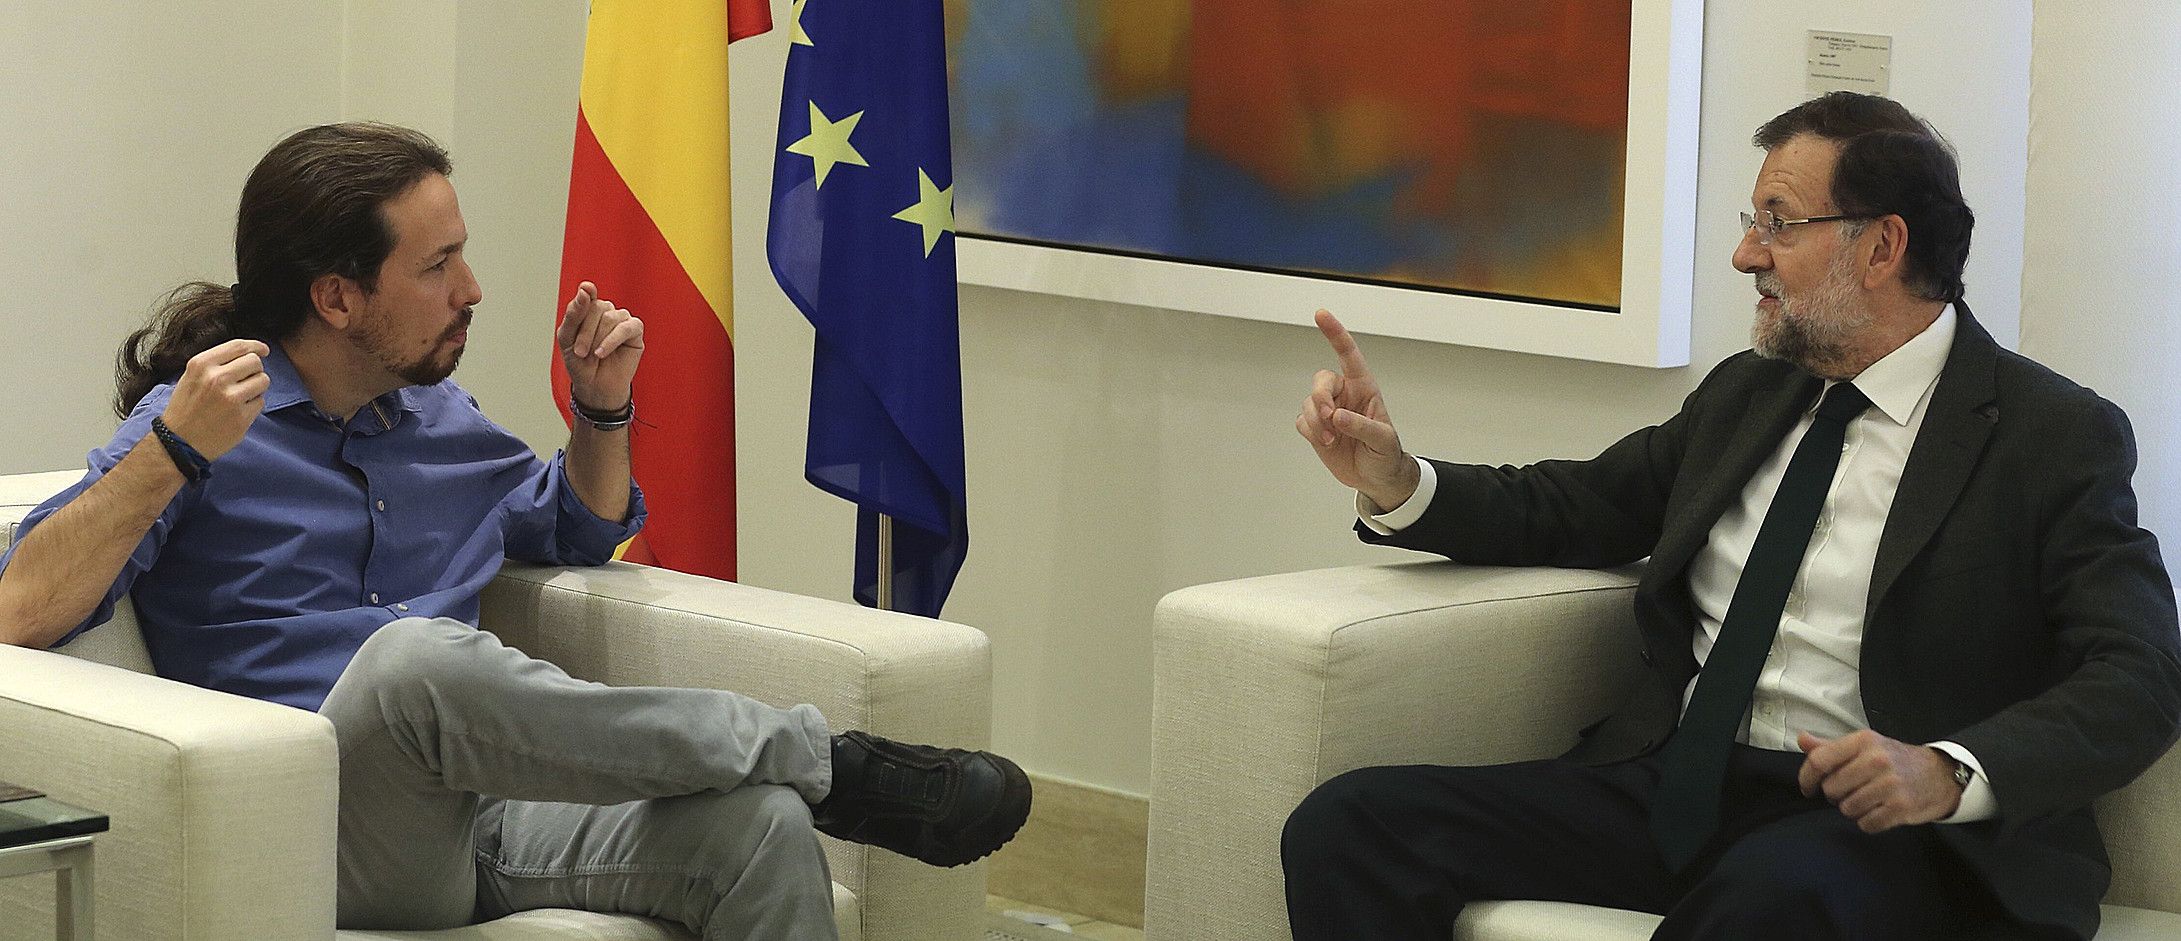 Pablo Iglesias eta Mariano Rajoy, atzo, Moncloako jauregian. BALLESTEROS / EFE.